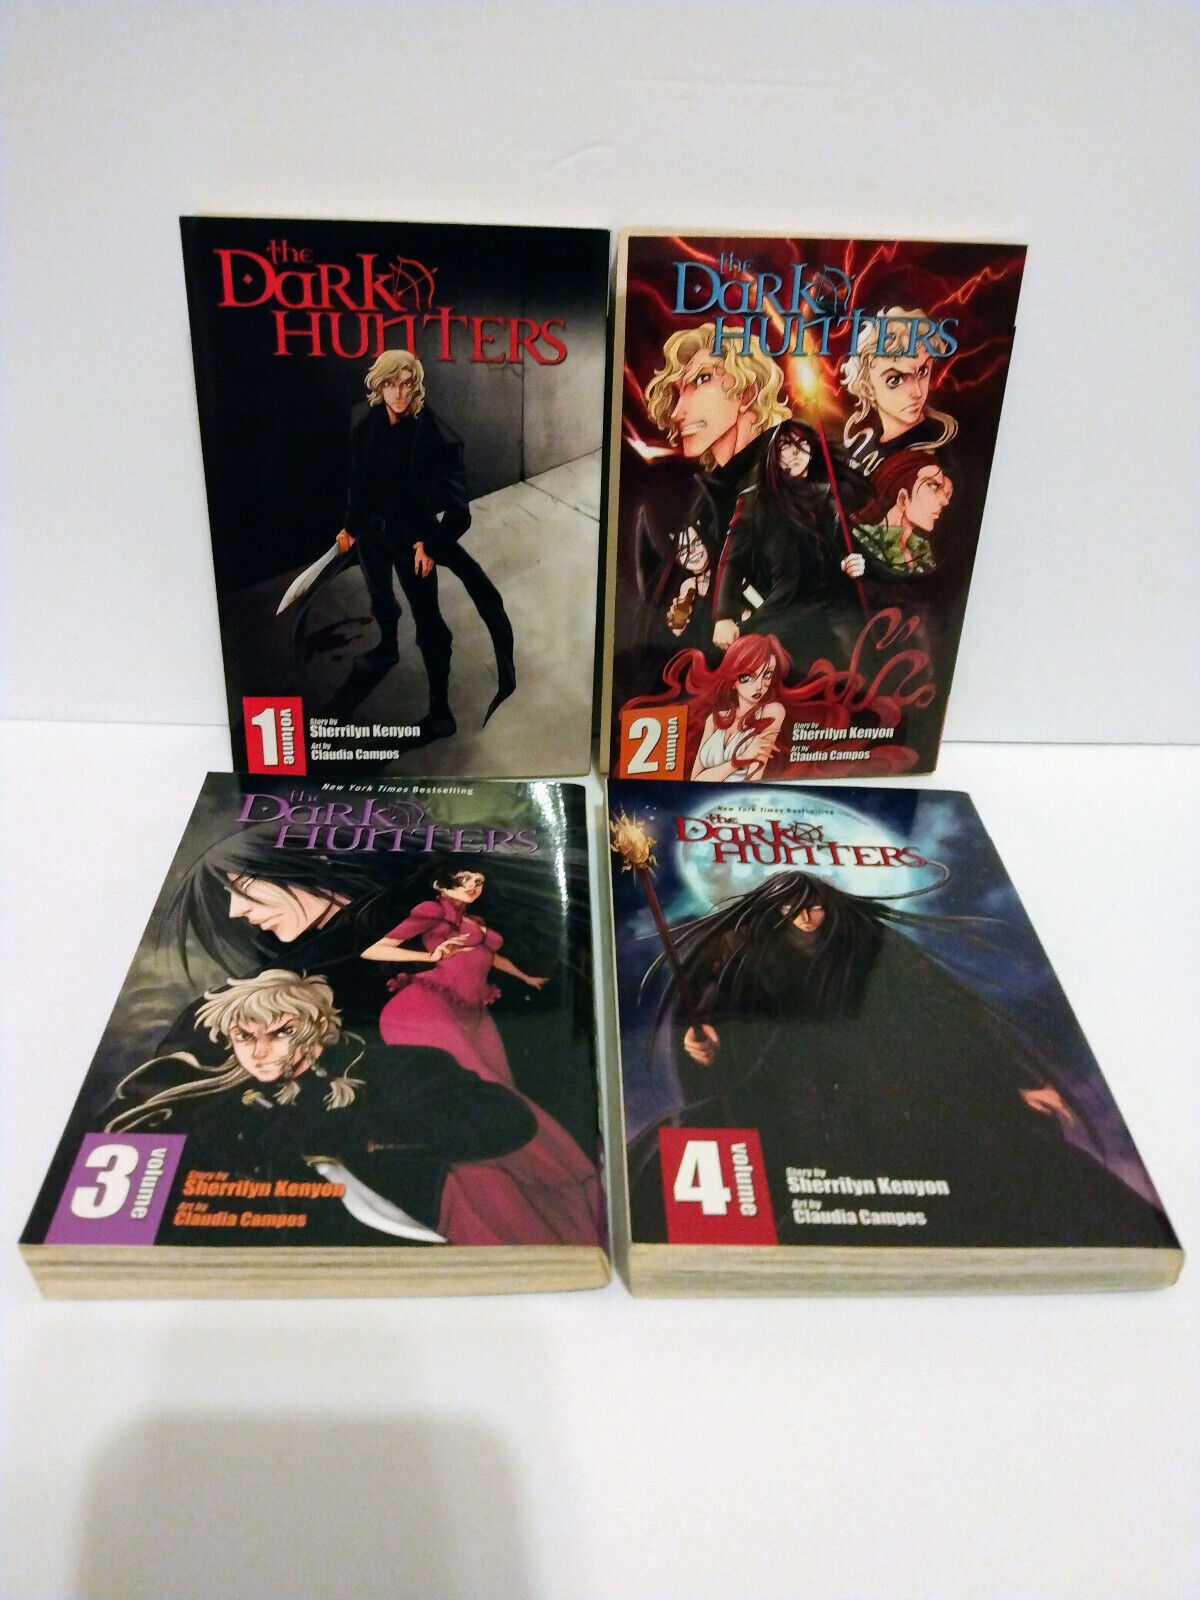 The Dark Hunters (Vol 1-4) Manga Graphic Novels by Sherrilyn Kenyon  (Excellent)